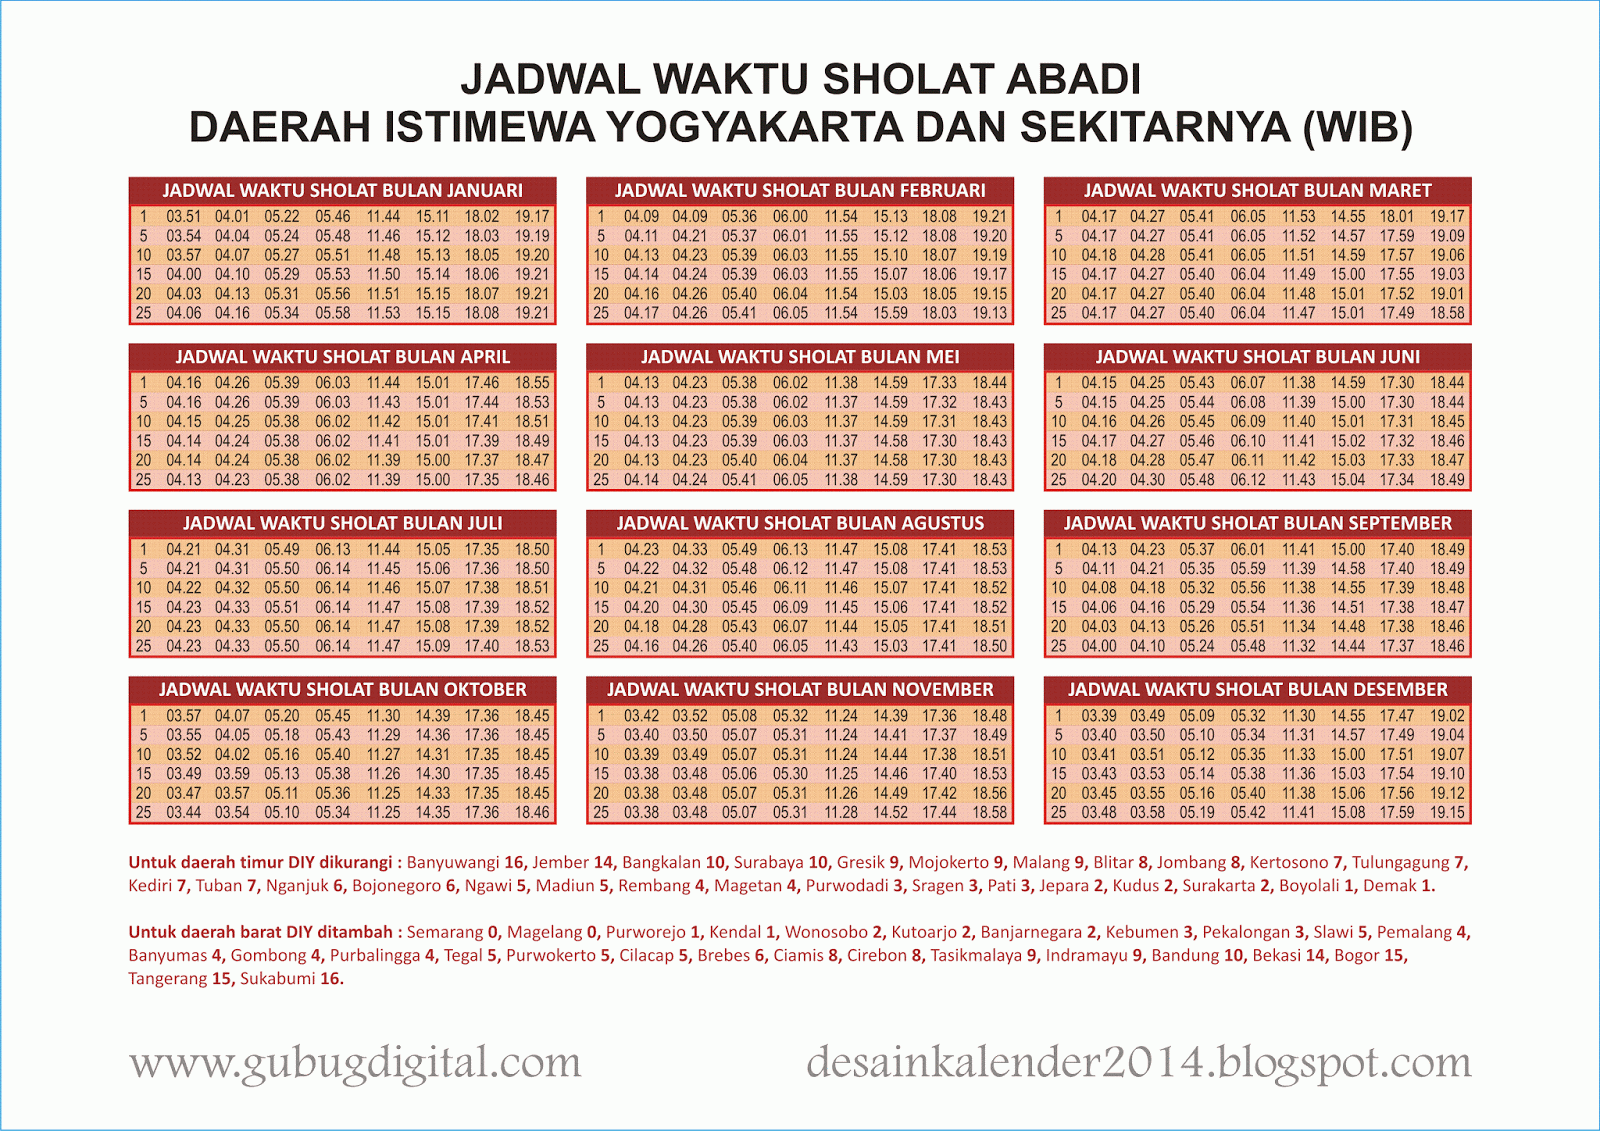 PERCETAKAN KALENDER: JADWAL WAKTU SHOLAT 2014